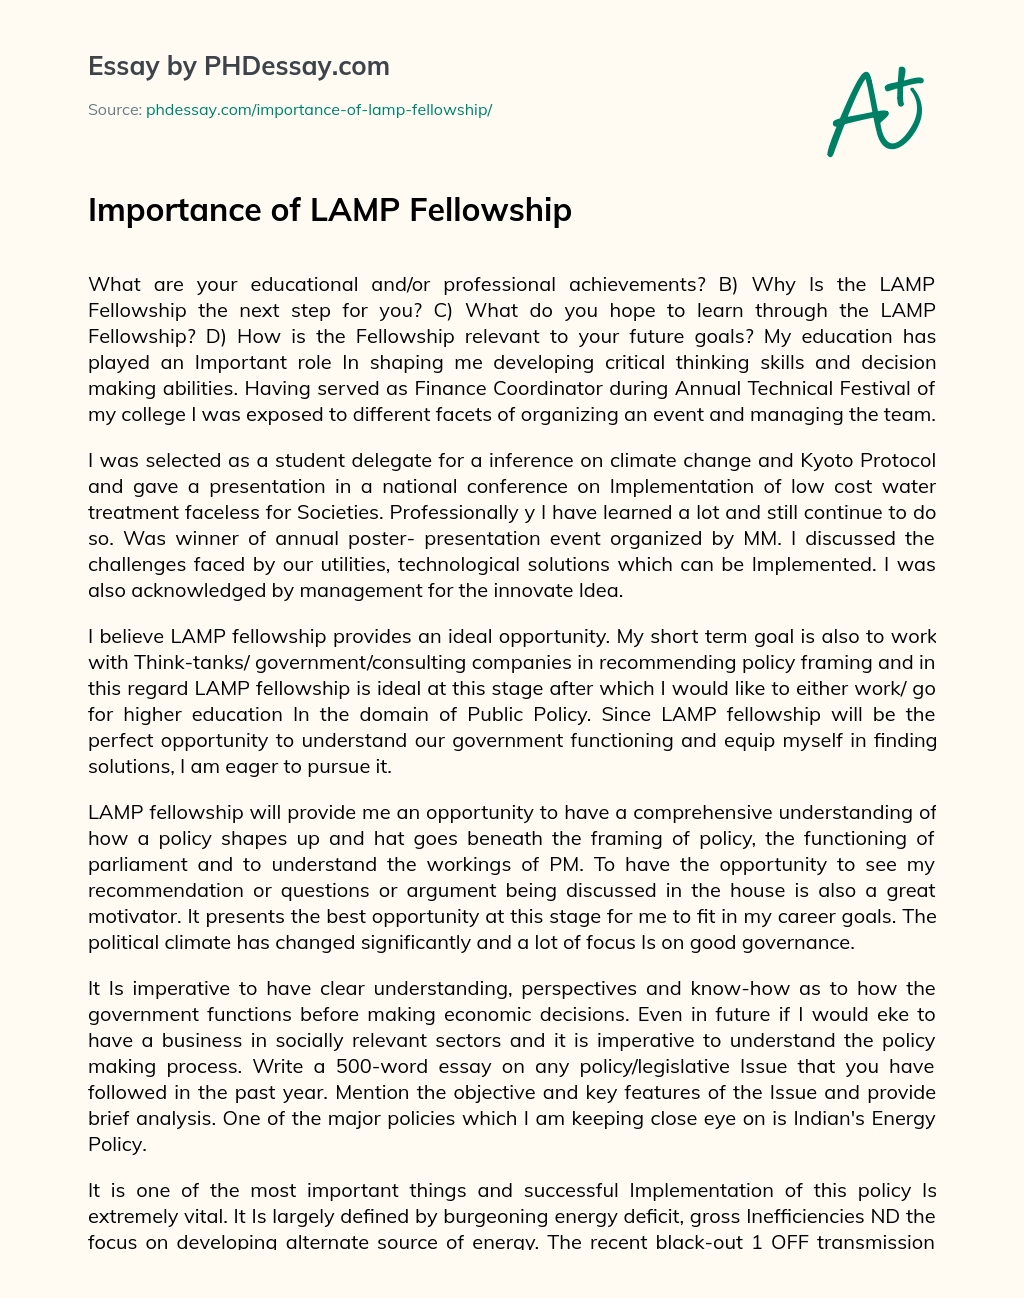 Importance of LAMP Fellowship essay